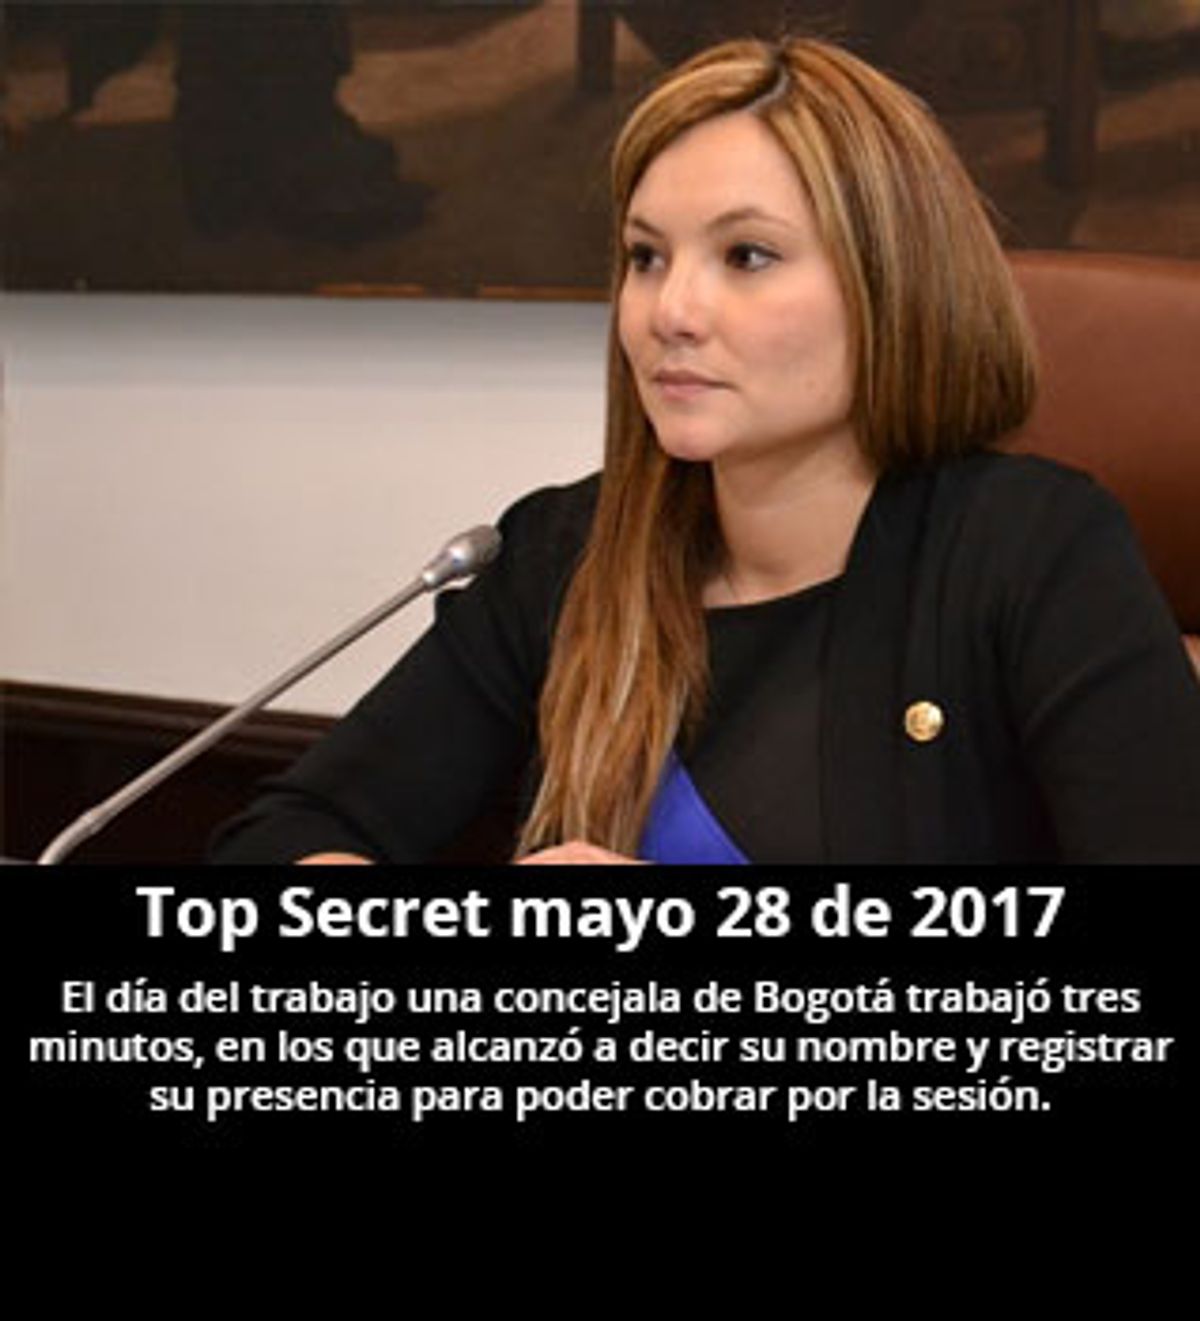 Top secret mayo 28 de 2017